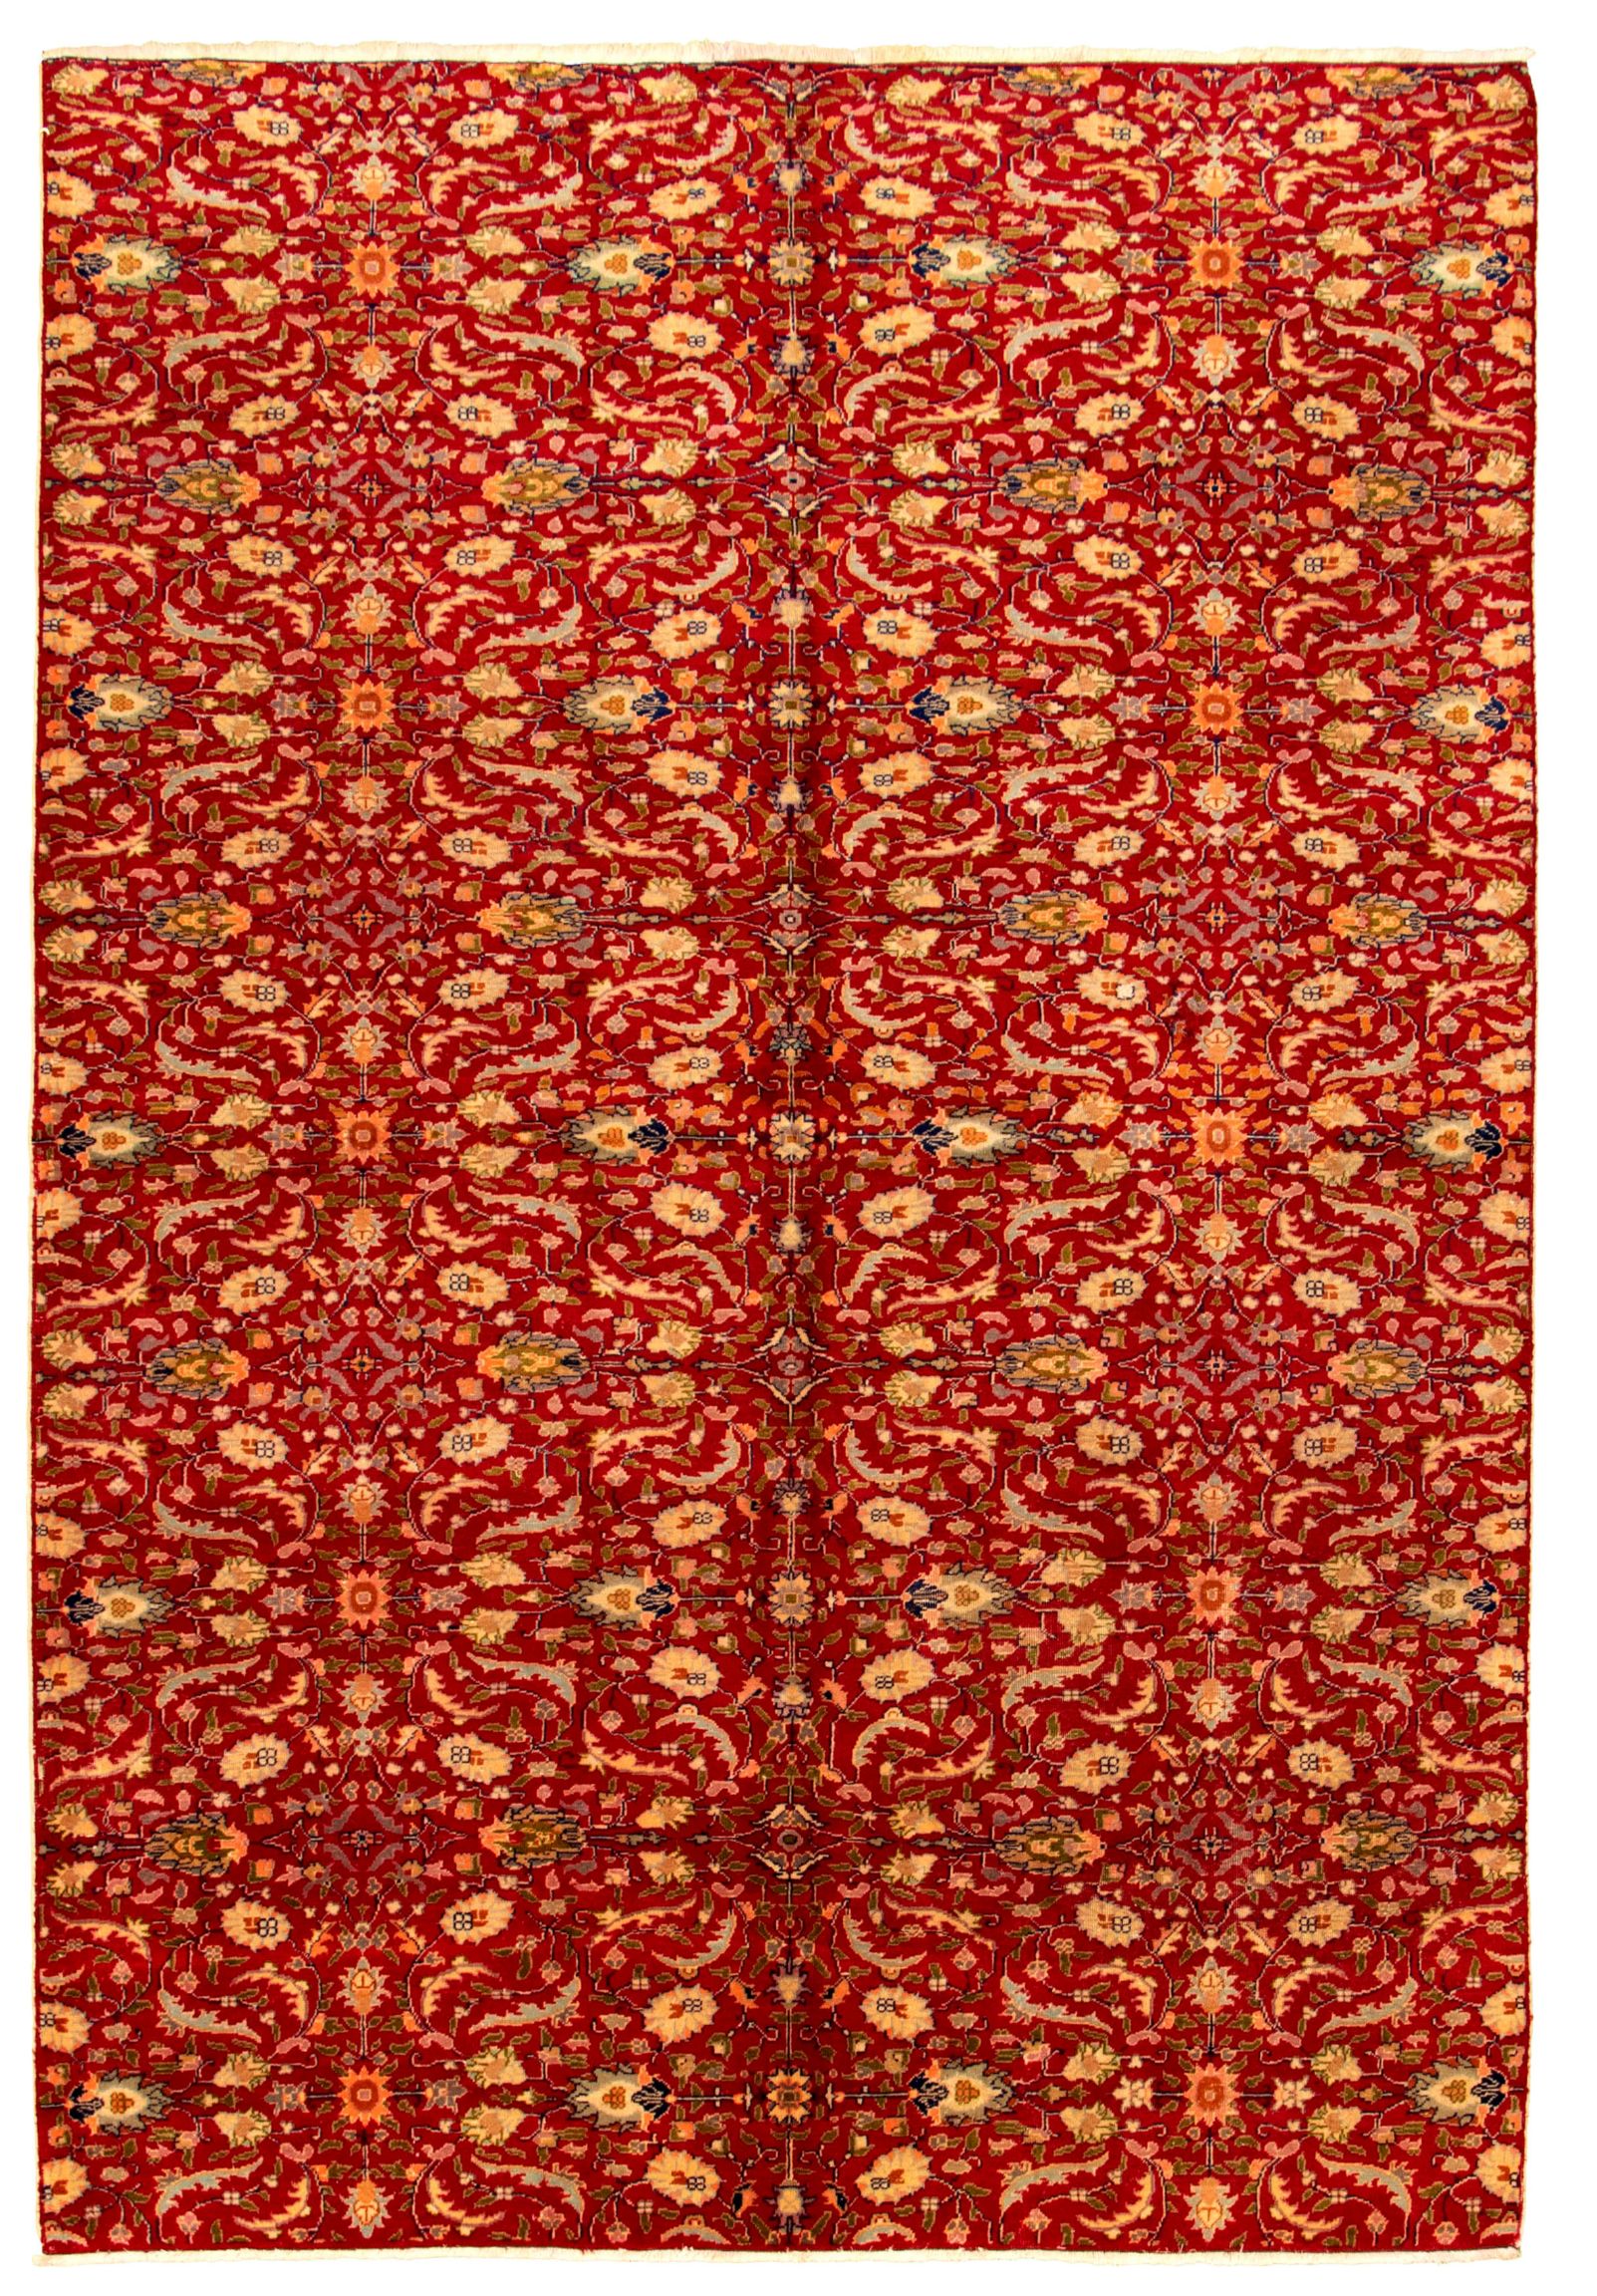 Hand-knotted Keisari Vintage Dark Red Wool Rug 6'5" x 9'6"  Size: 6'5" x 9'6"  